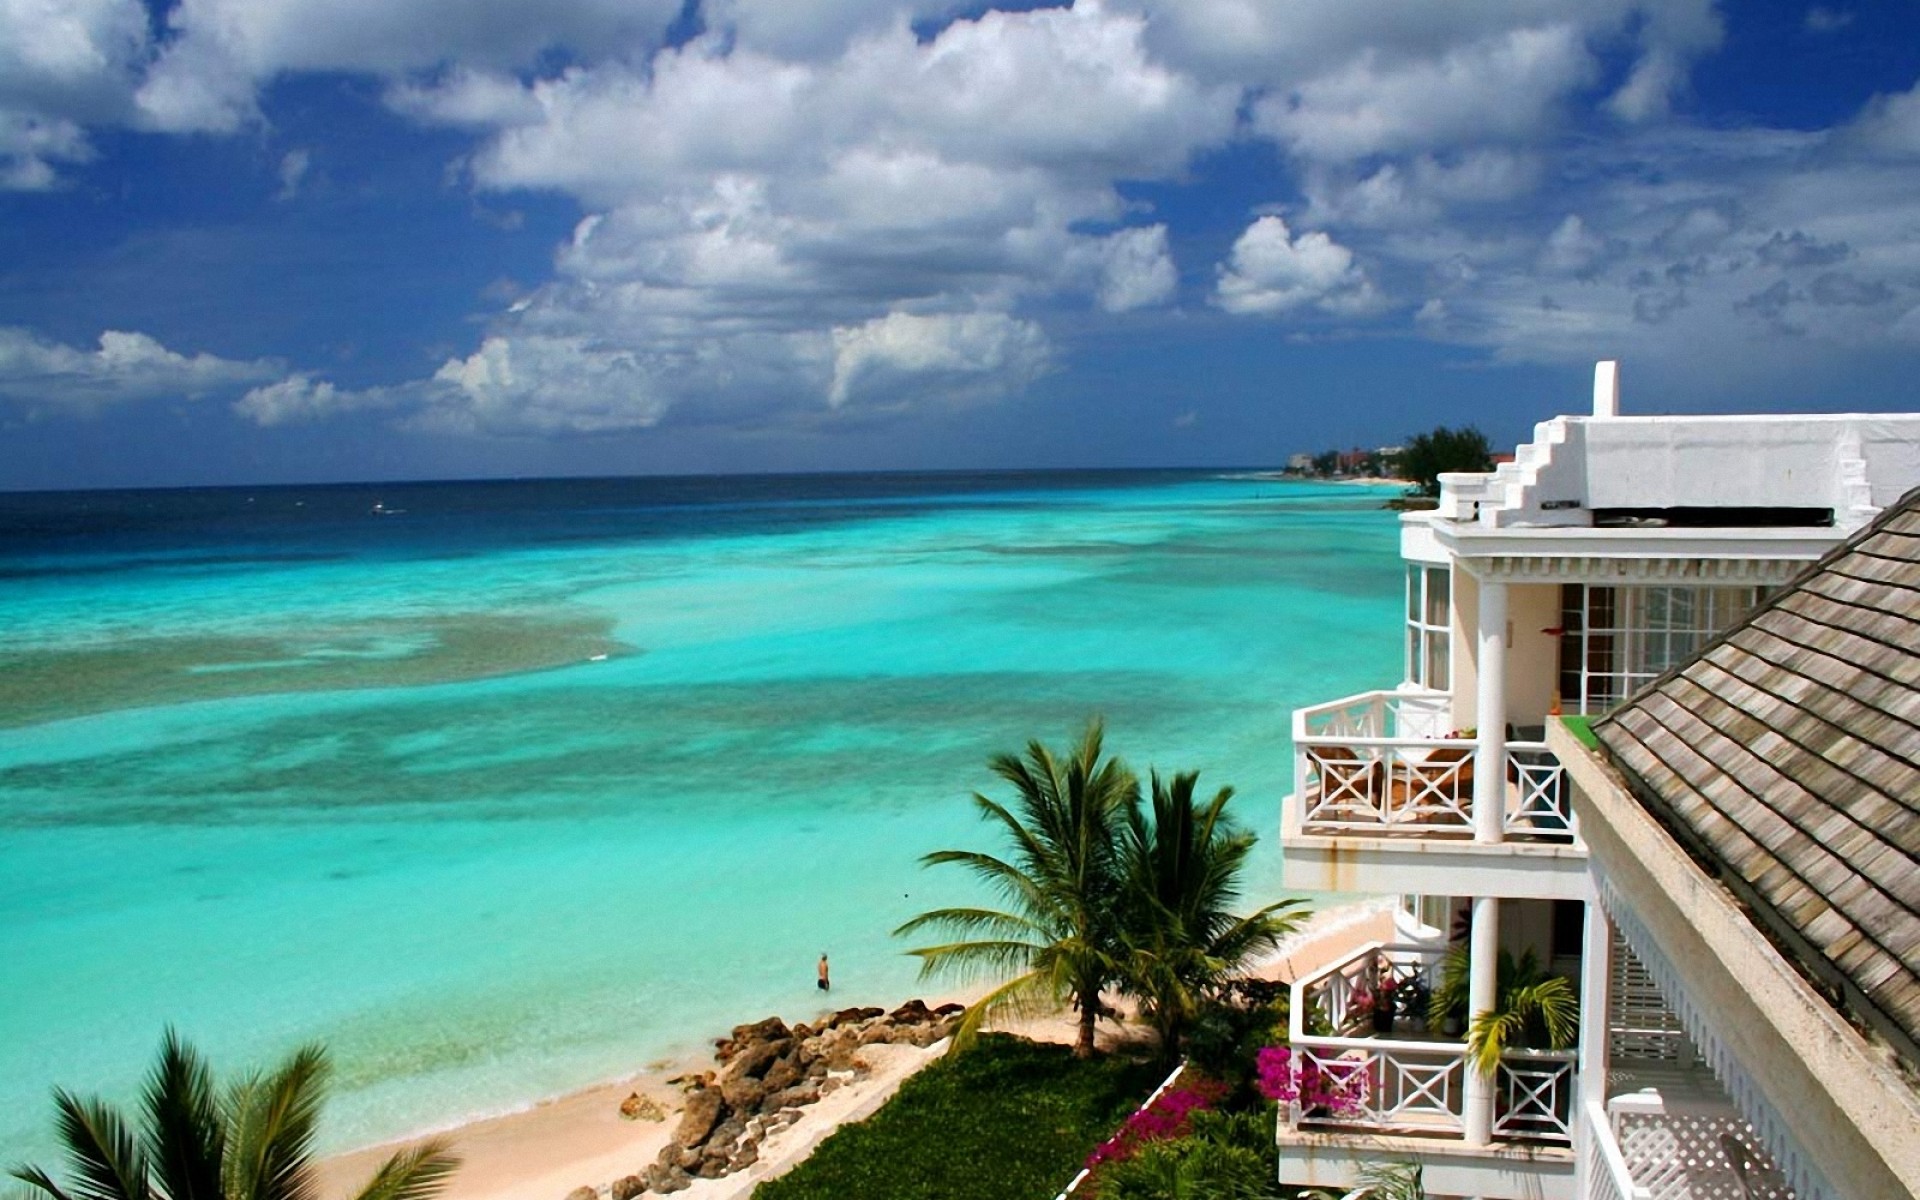  Barbados Windows Backgrounds